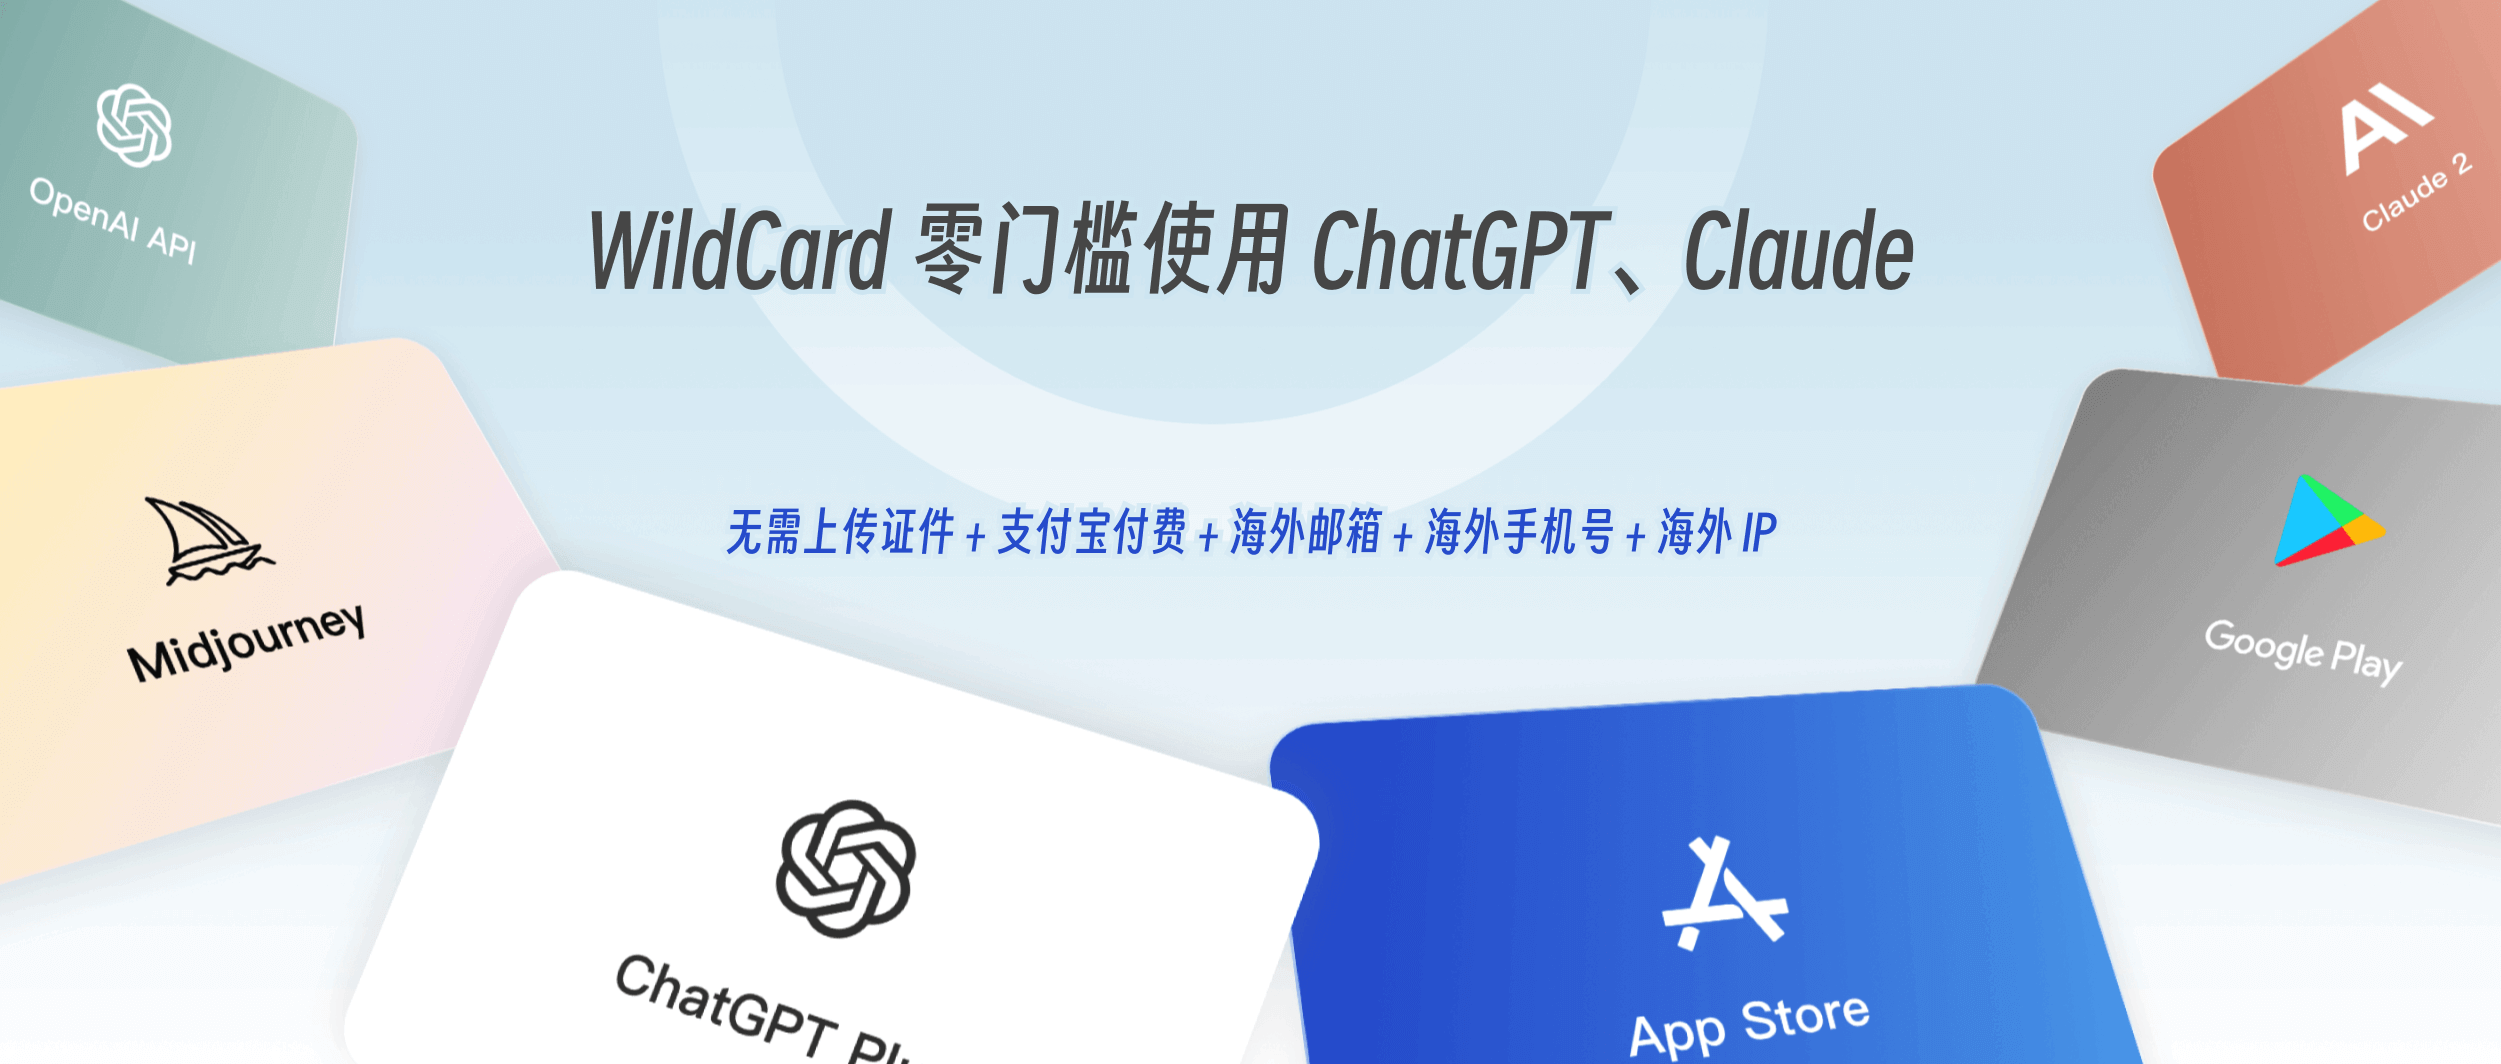 WildCard - 让国内用户轻松订阅 ChatGPT、Claude 等海外 AI 服务